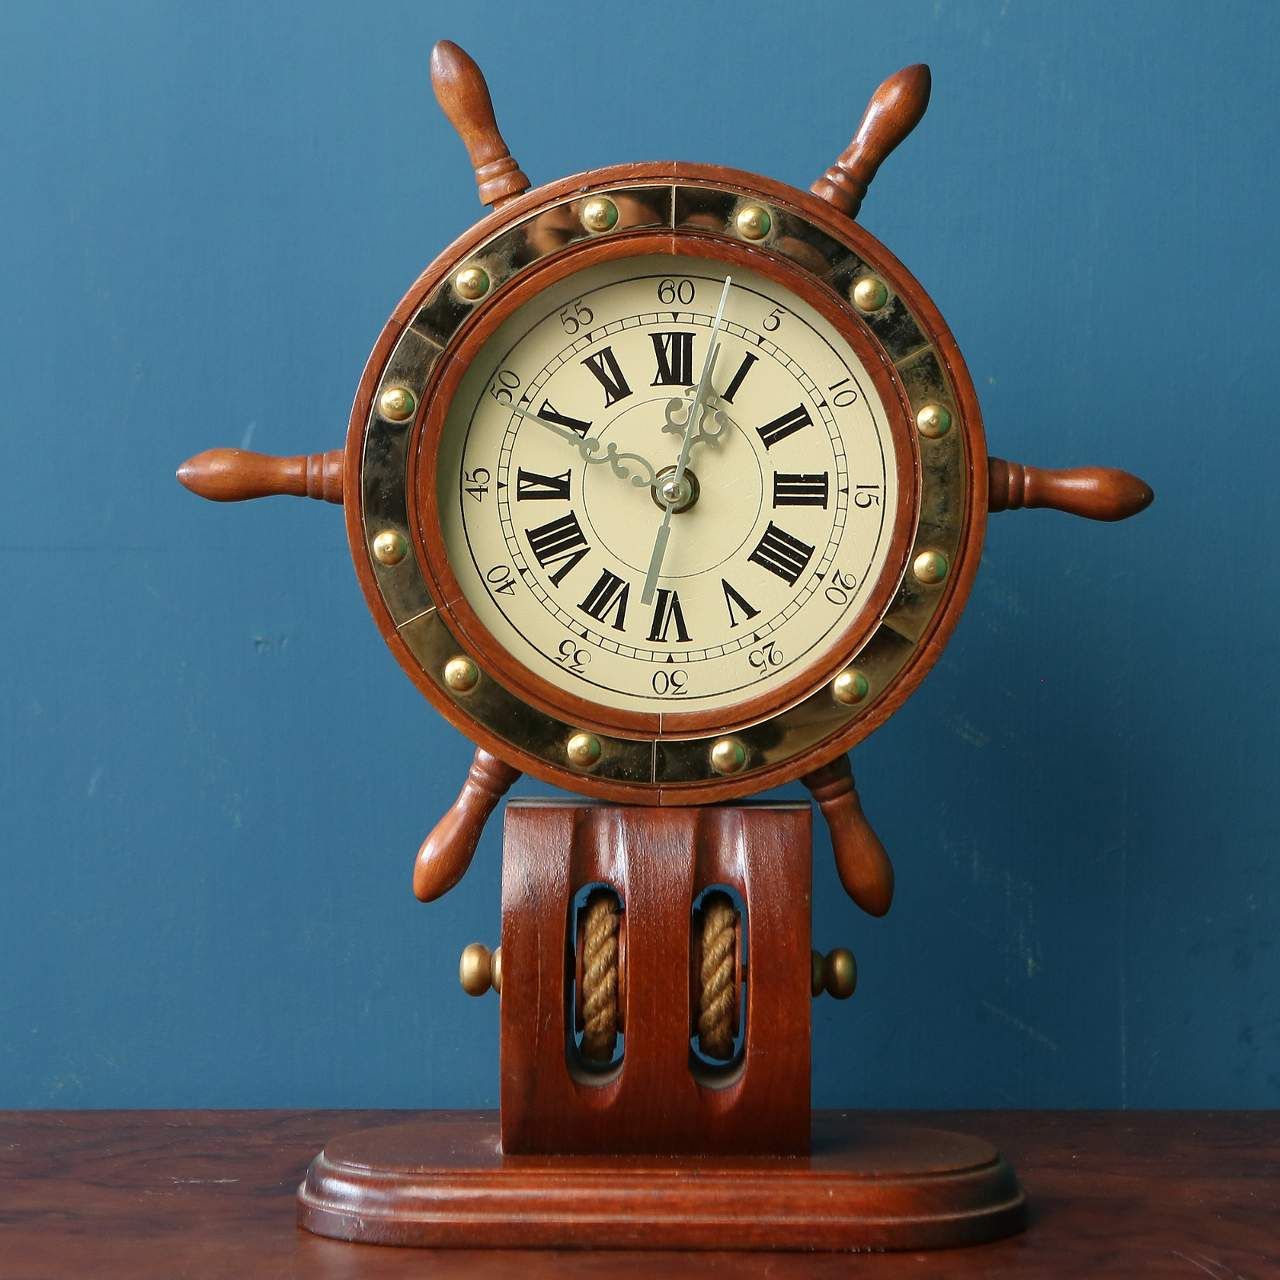 Wooden Sailor's Helm Clock, Antique Sailor's Watch